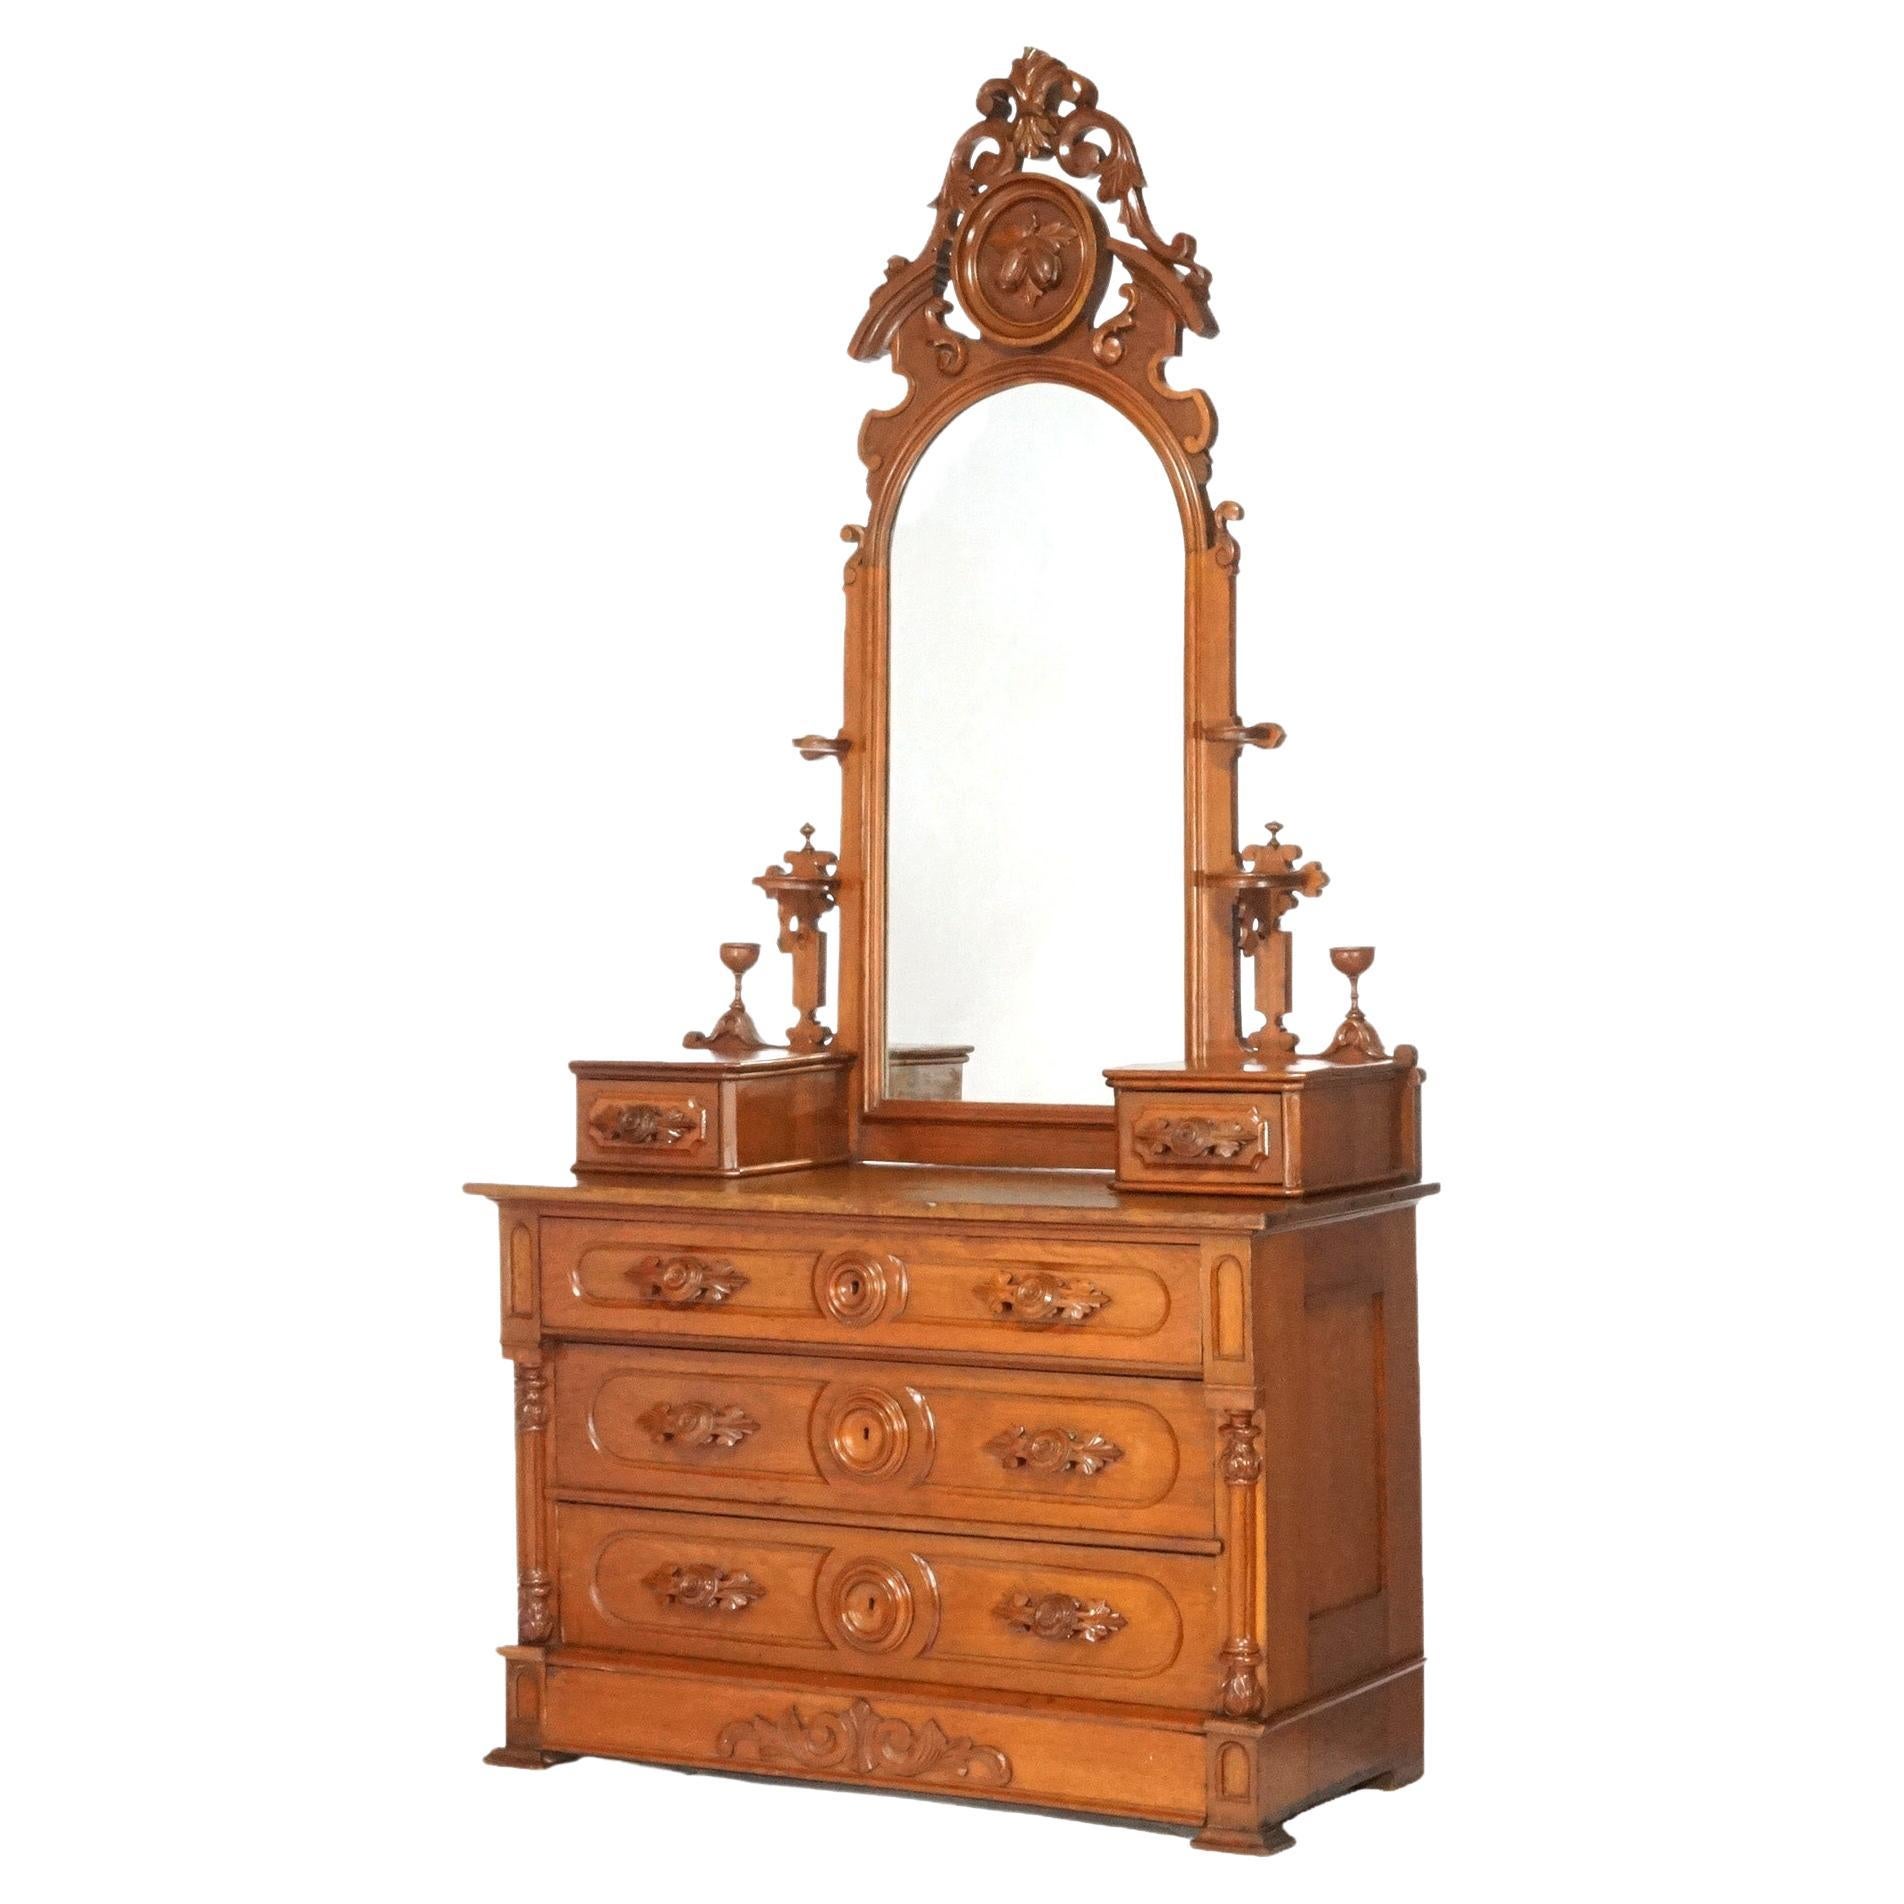 Antique Renaissance Revival Carved Walnut Dresser with Mirror circa 1880